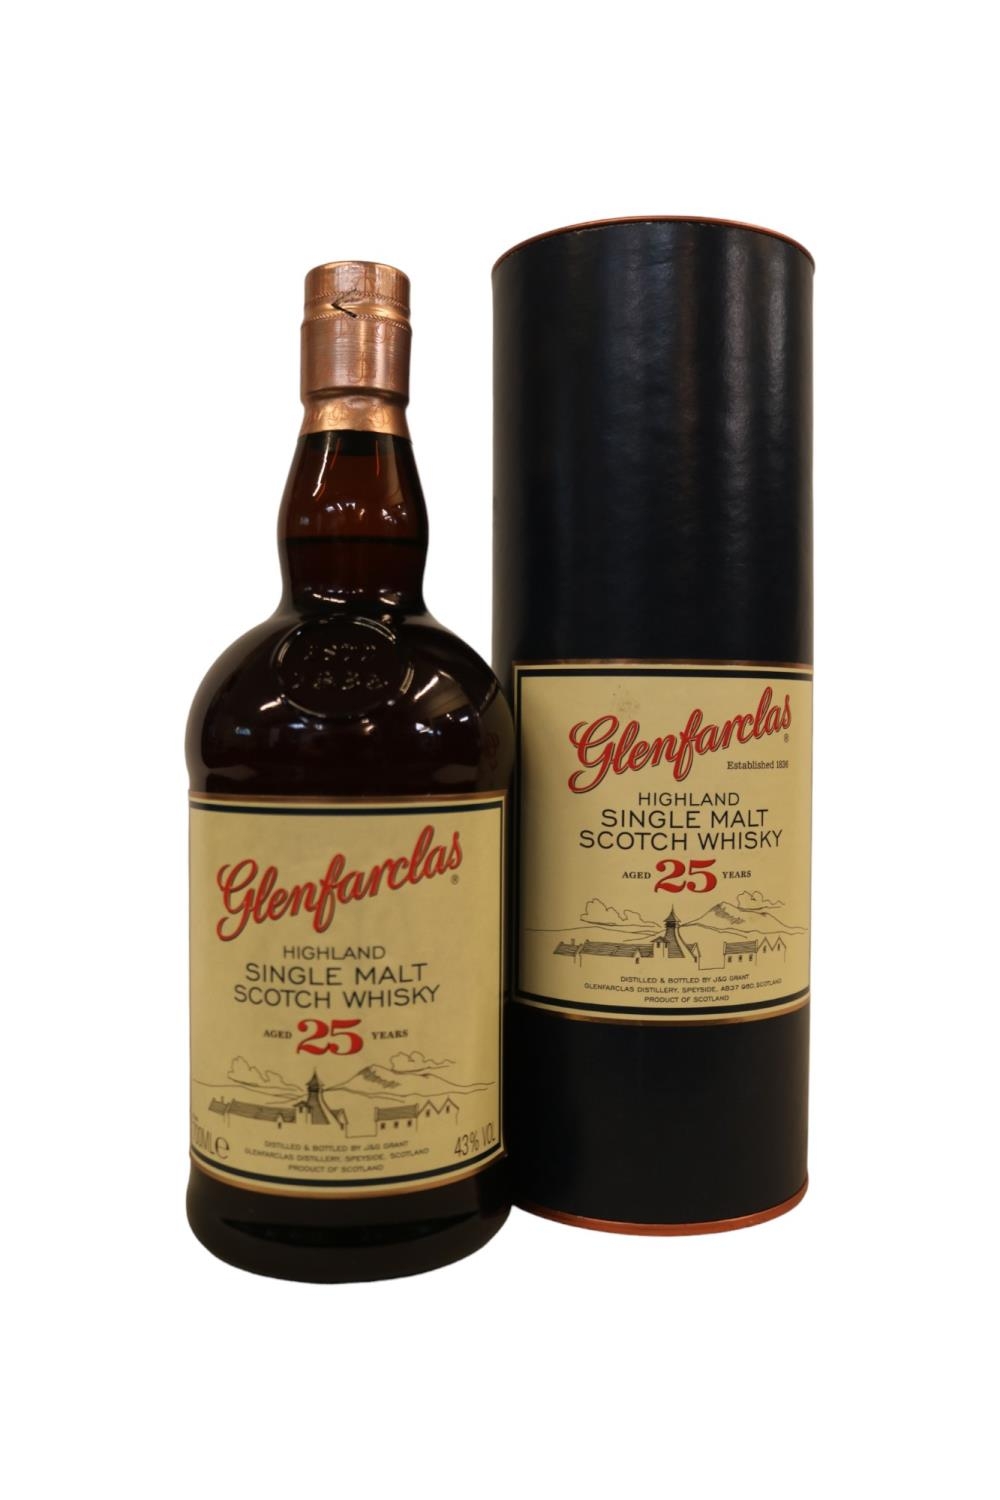 Glenfarclas Highland Single Malt Scotch Whisky Aged 25 years 700ml 43% Vol